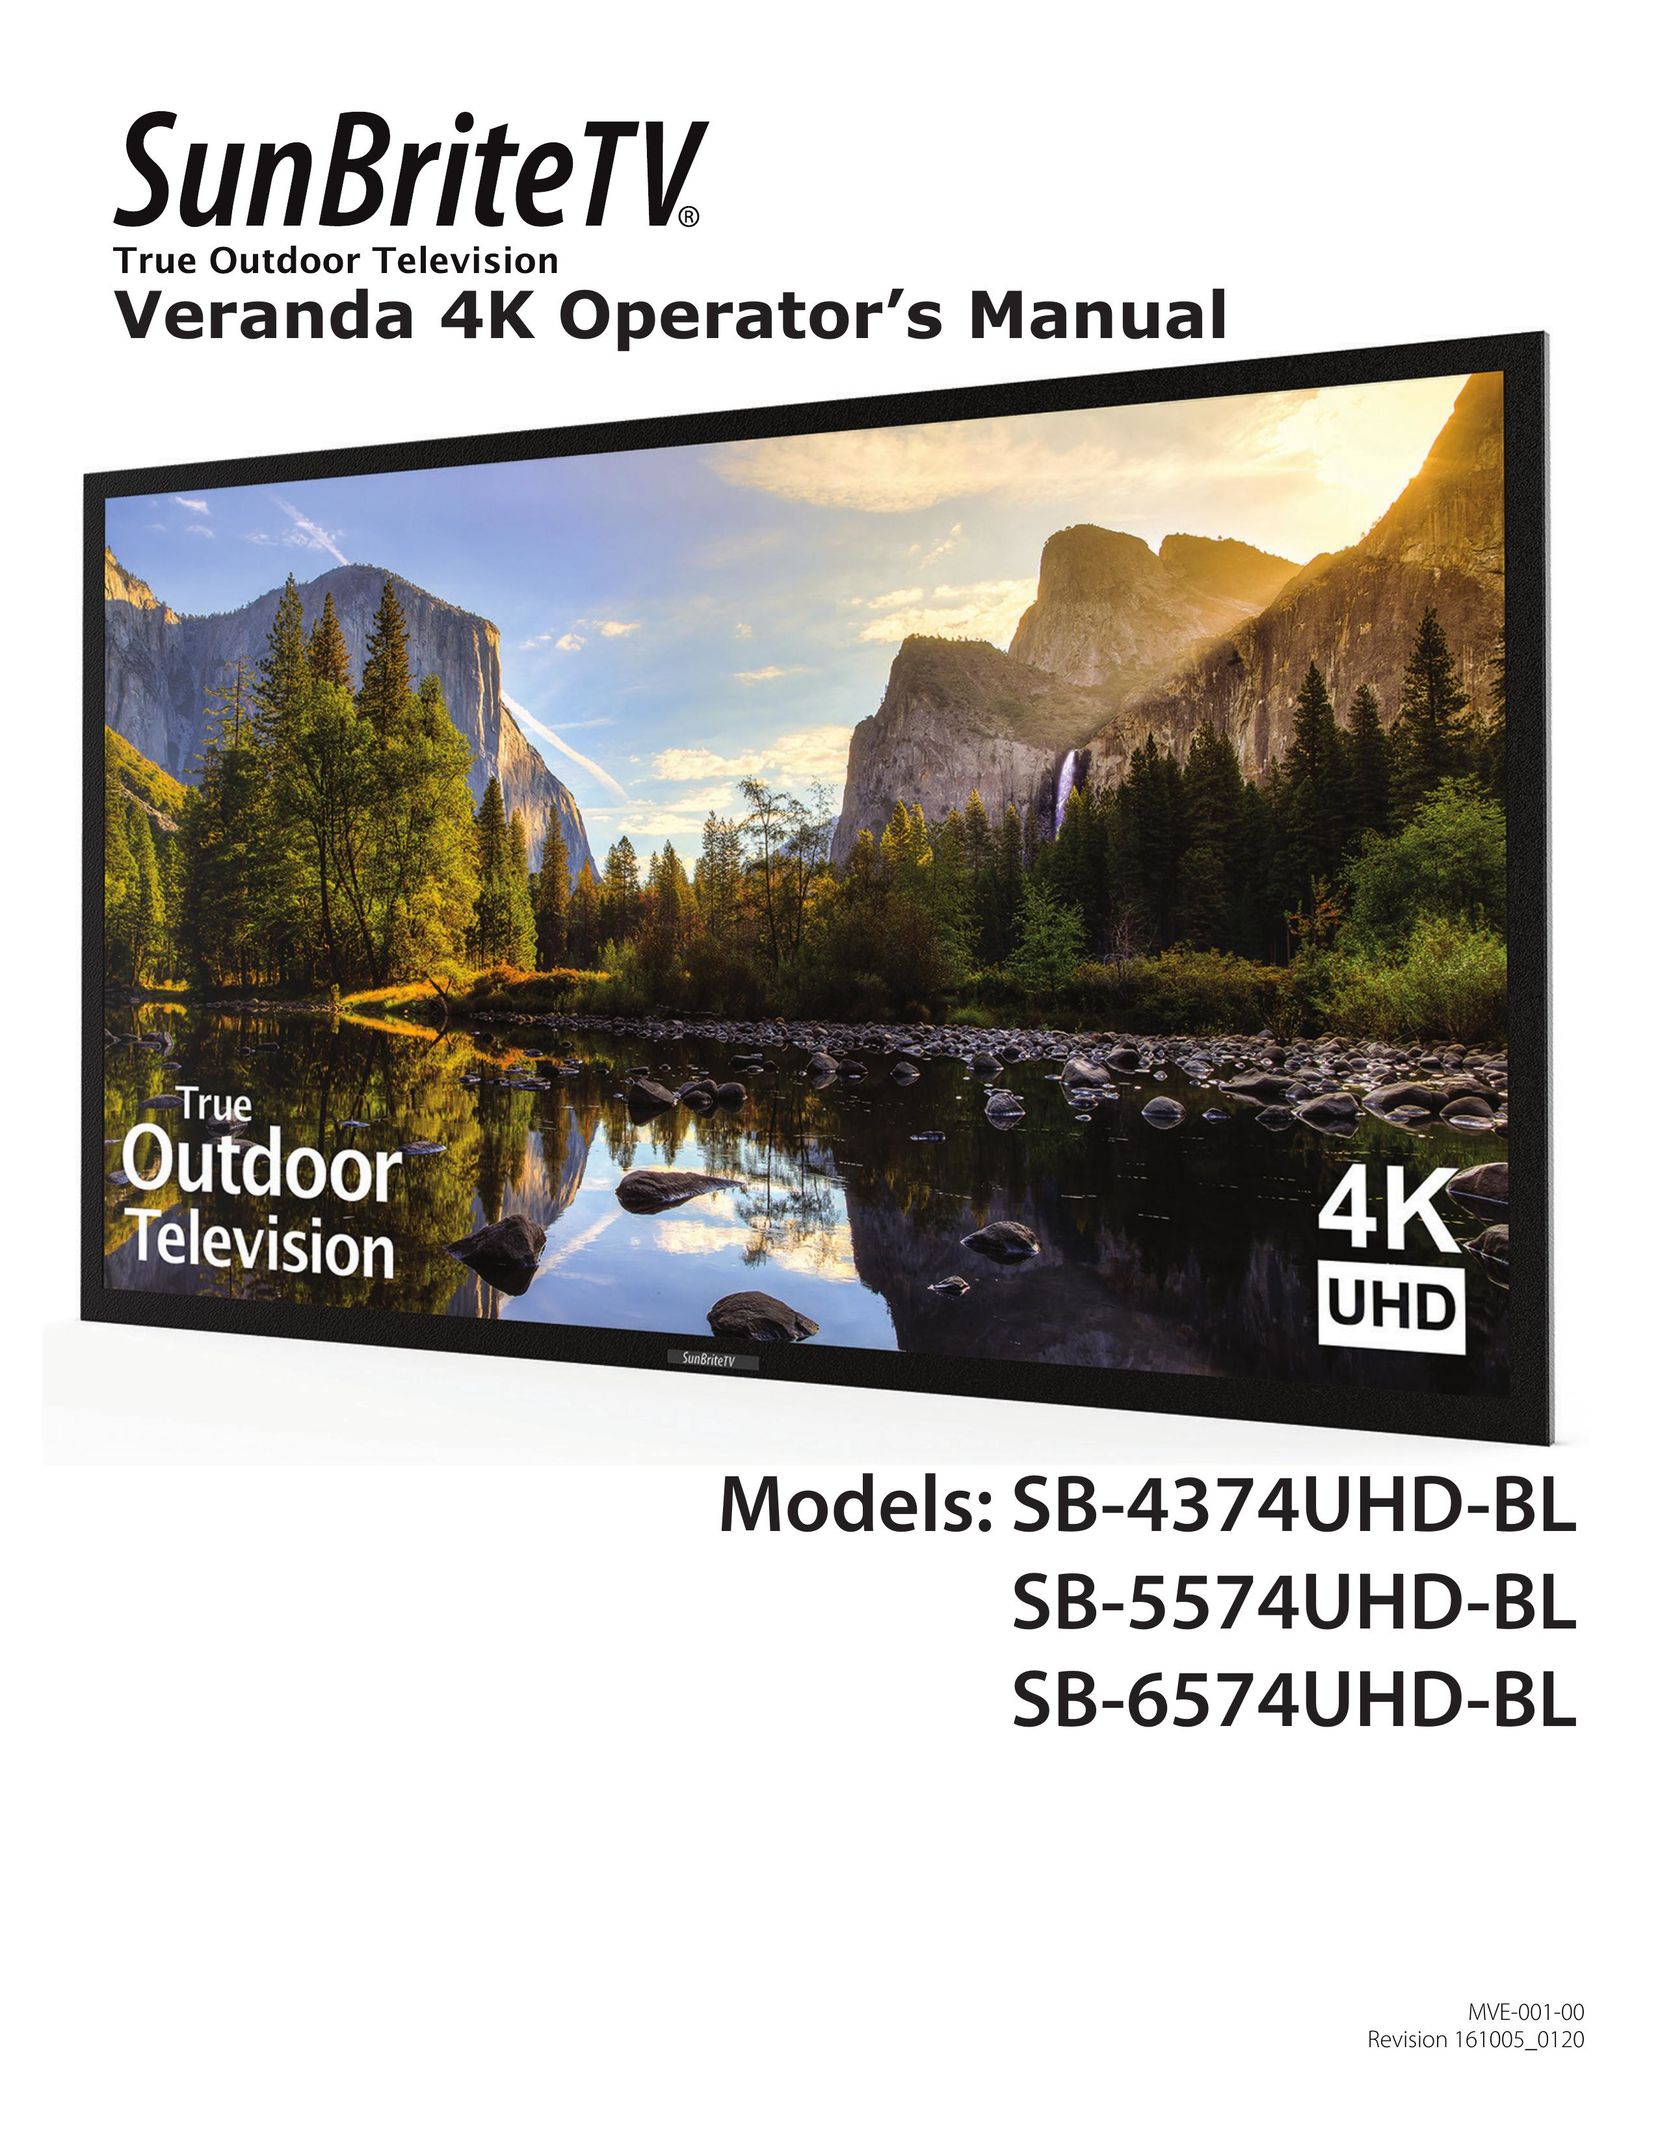 SunBriteTV SB-6574UHD-BL Flat Panel Television User Manual